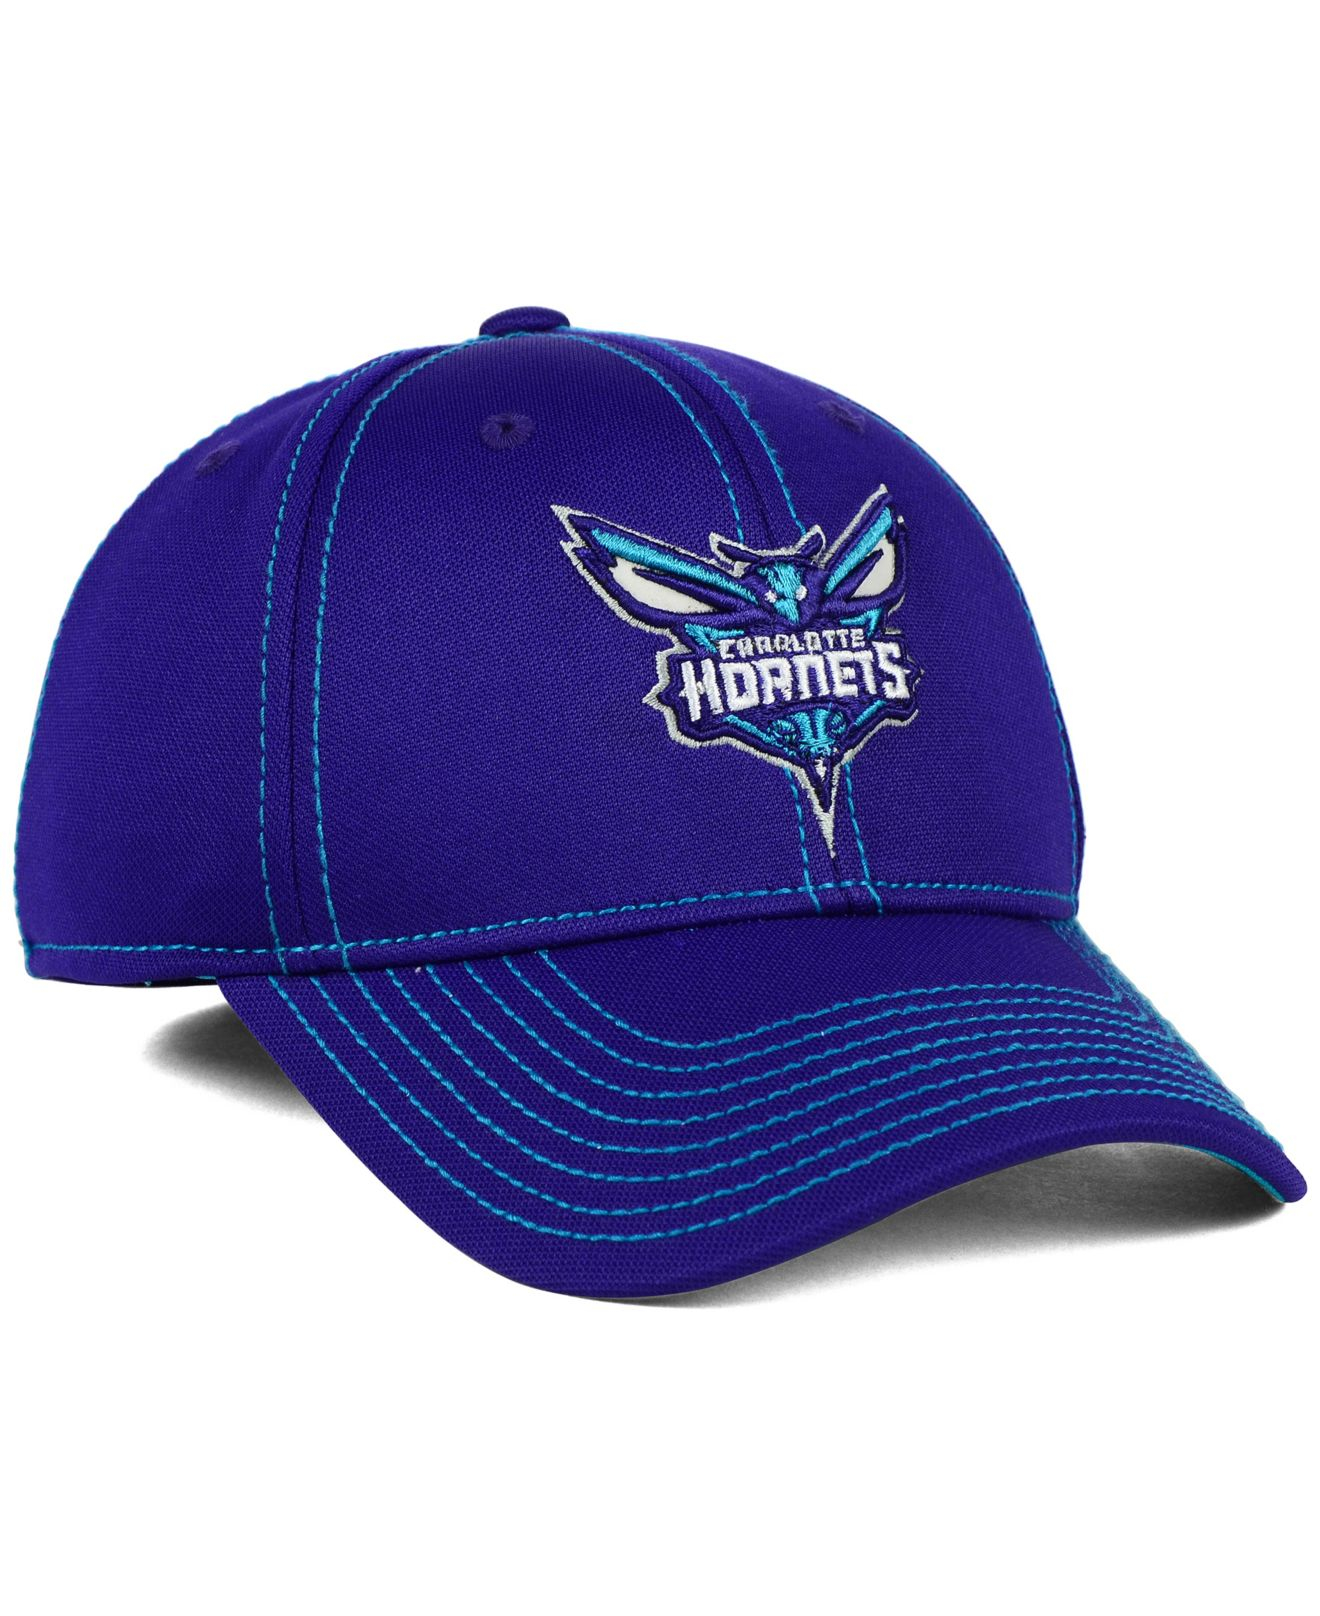 Lyst - Adidas Charlotte Hornets Reflective Flex Cap in Purple for Men